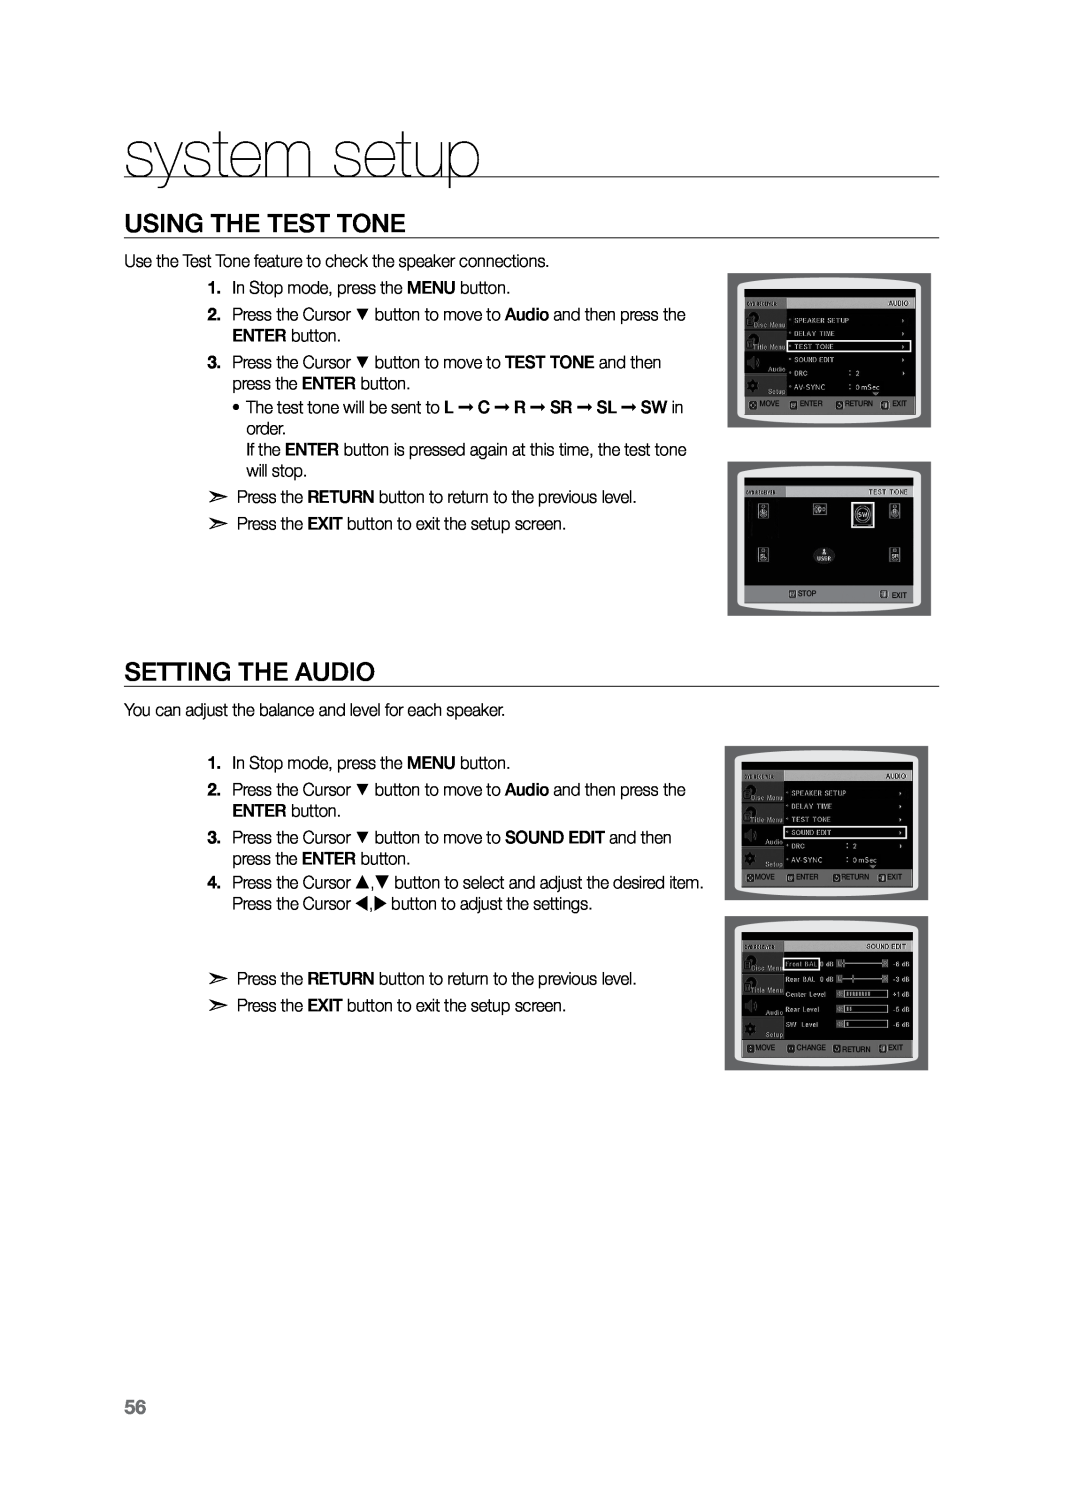 Samsung HT-Z320T/MEA, HT-Z220T/MEA, HT-TZ325T/SIM, HT-TZ325T/FMC manual Using the Test Tone, Setting the Audio, system setup 